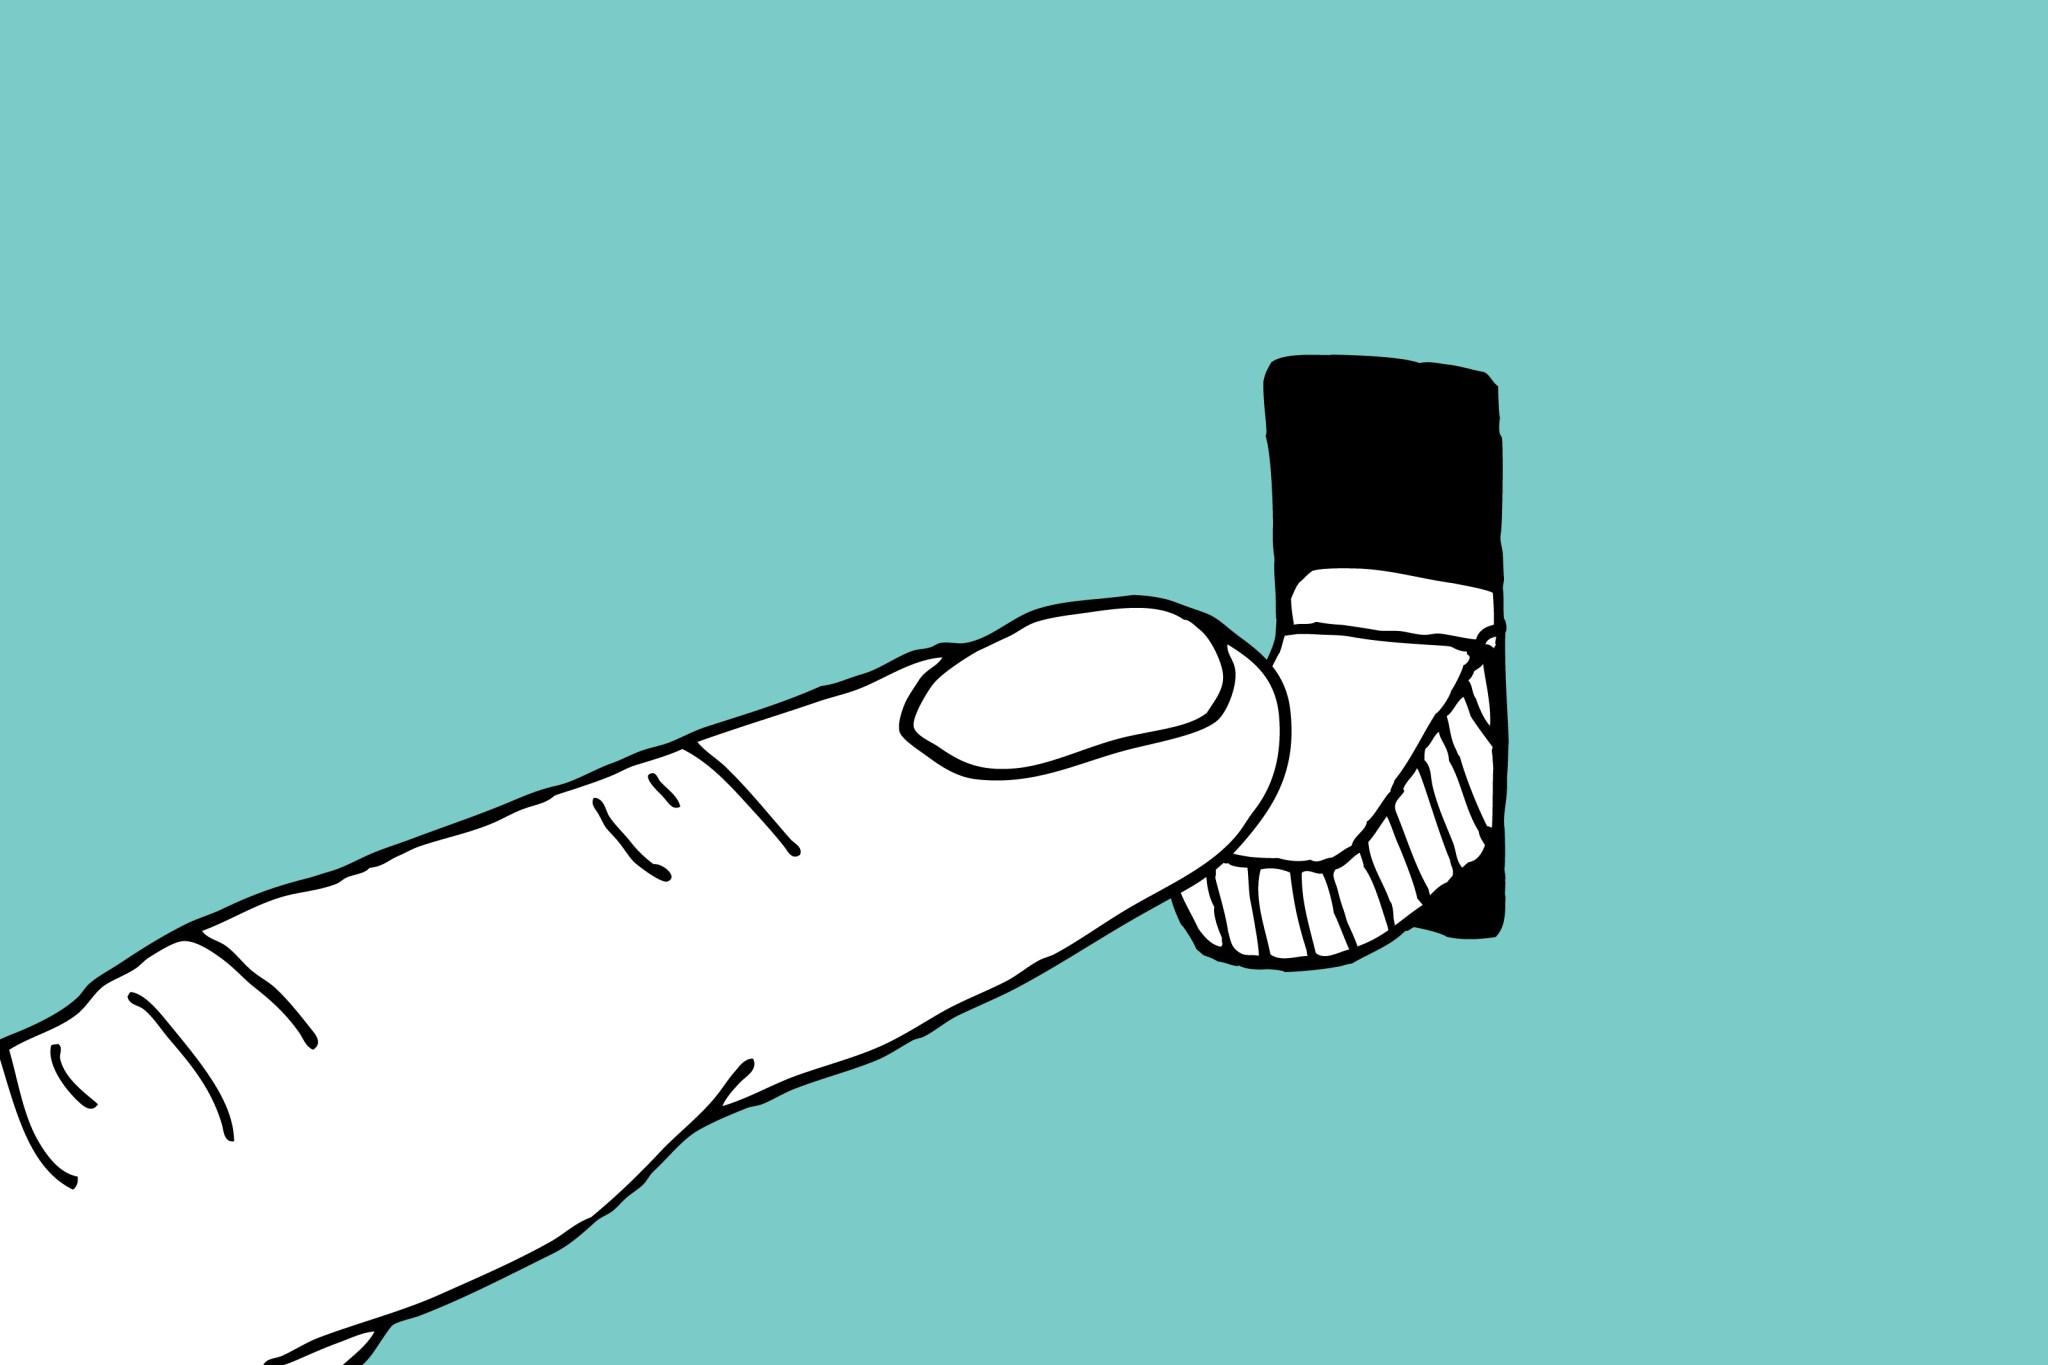 Finger flipping off a light switch illustration